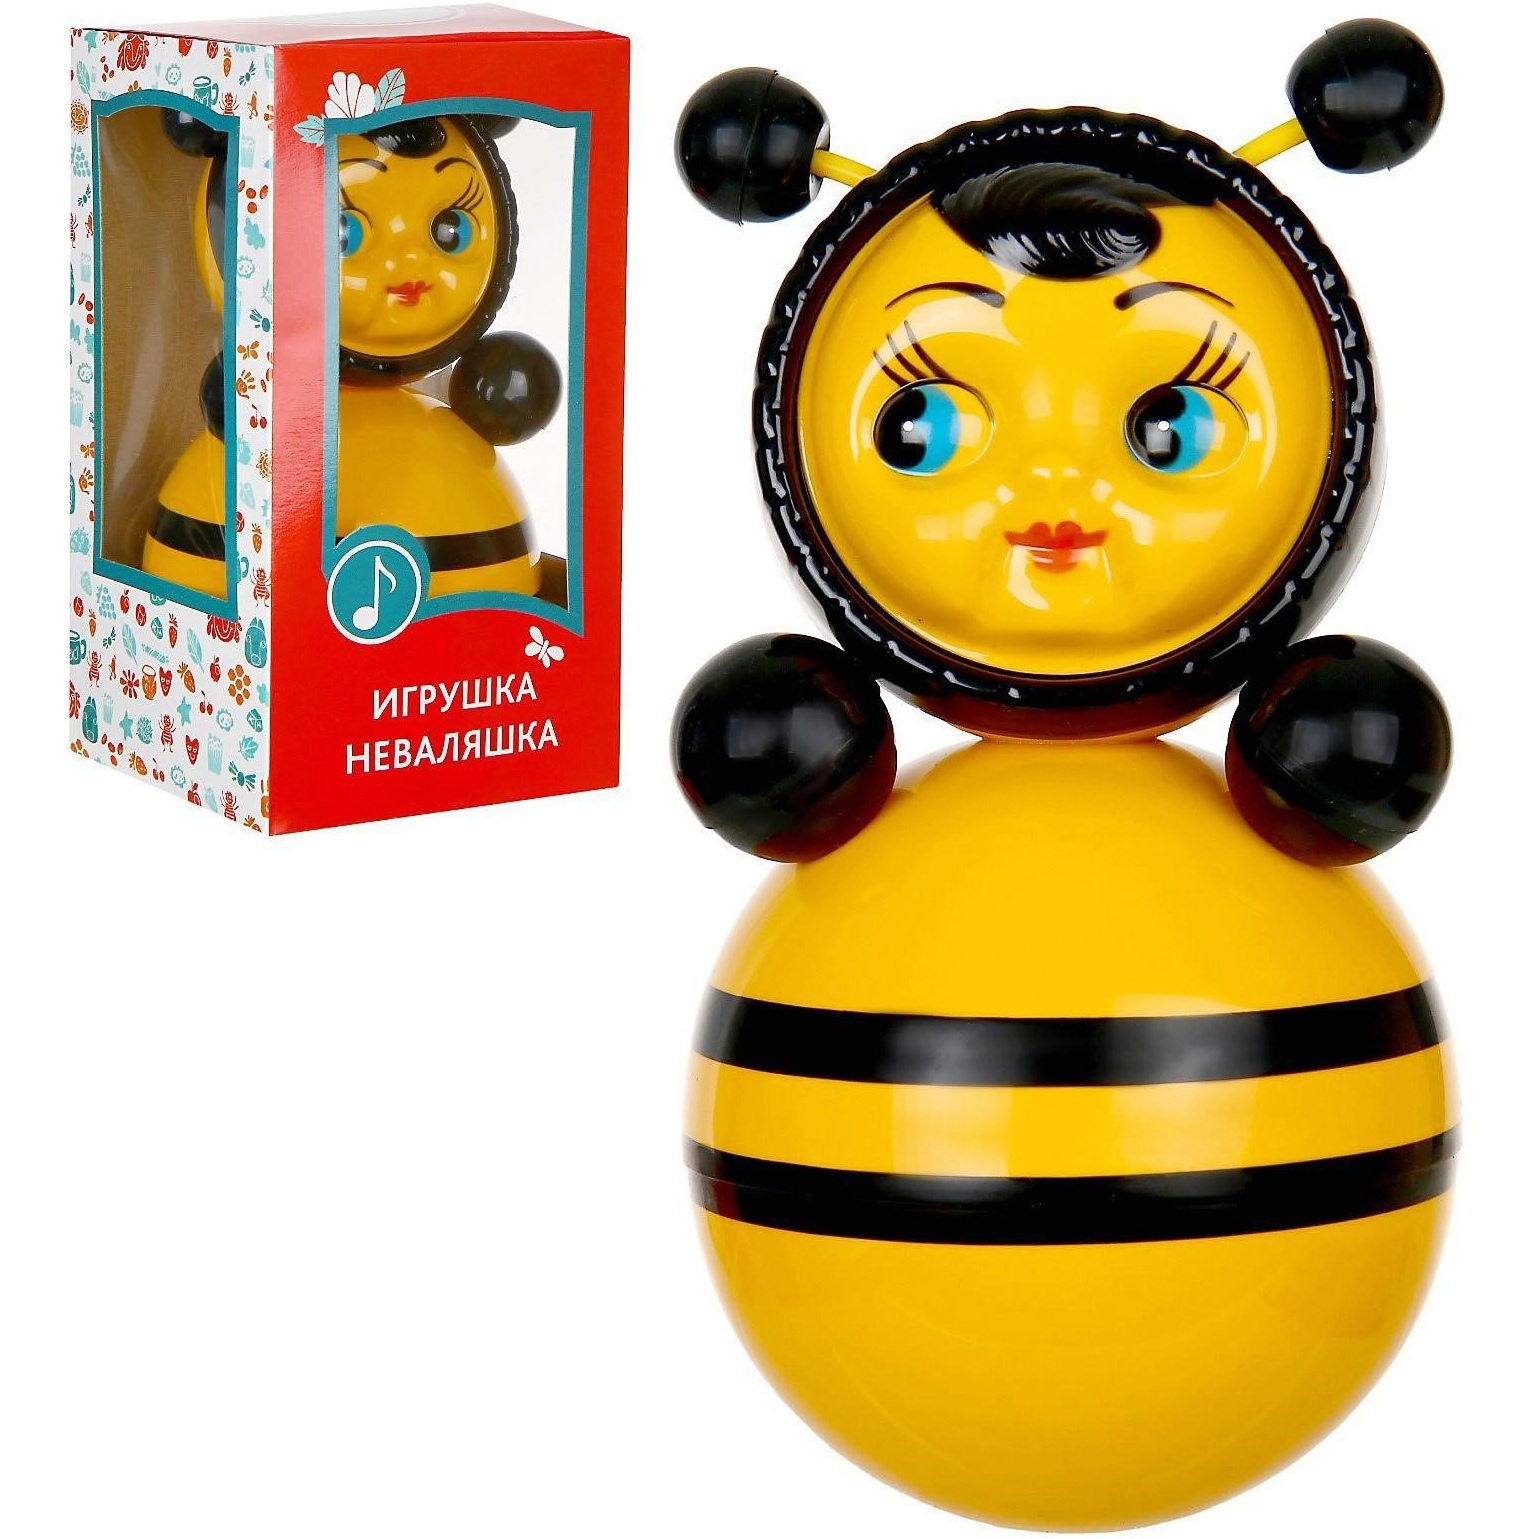 Неваляшка-игрушка 22 см. "пчелка" в упаковке, арт. 6с-011